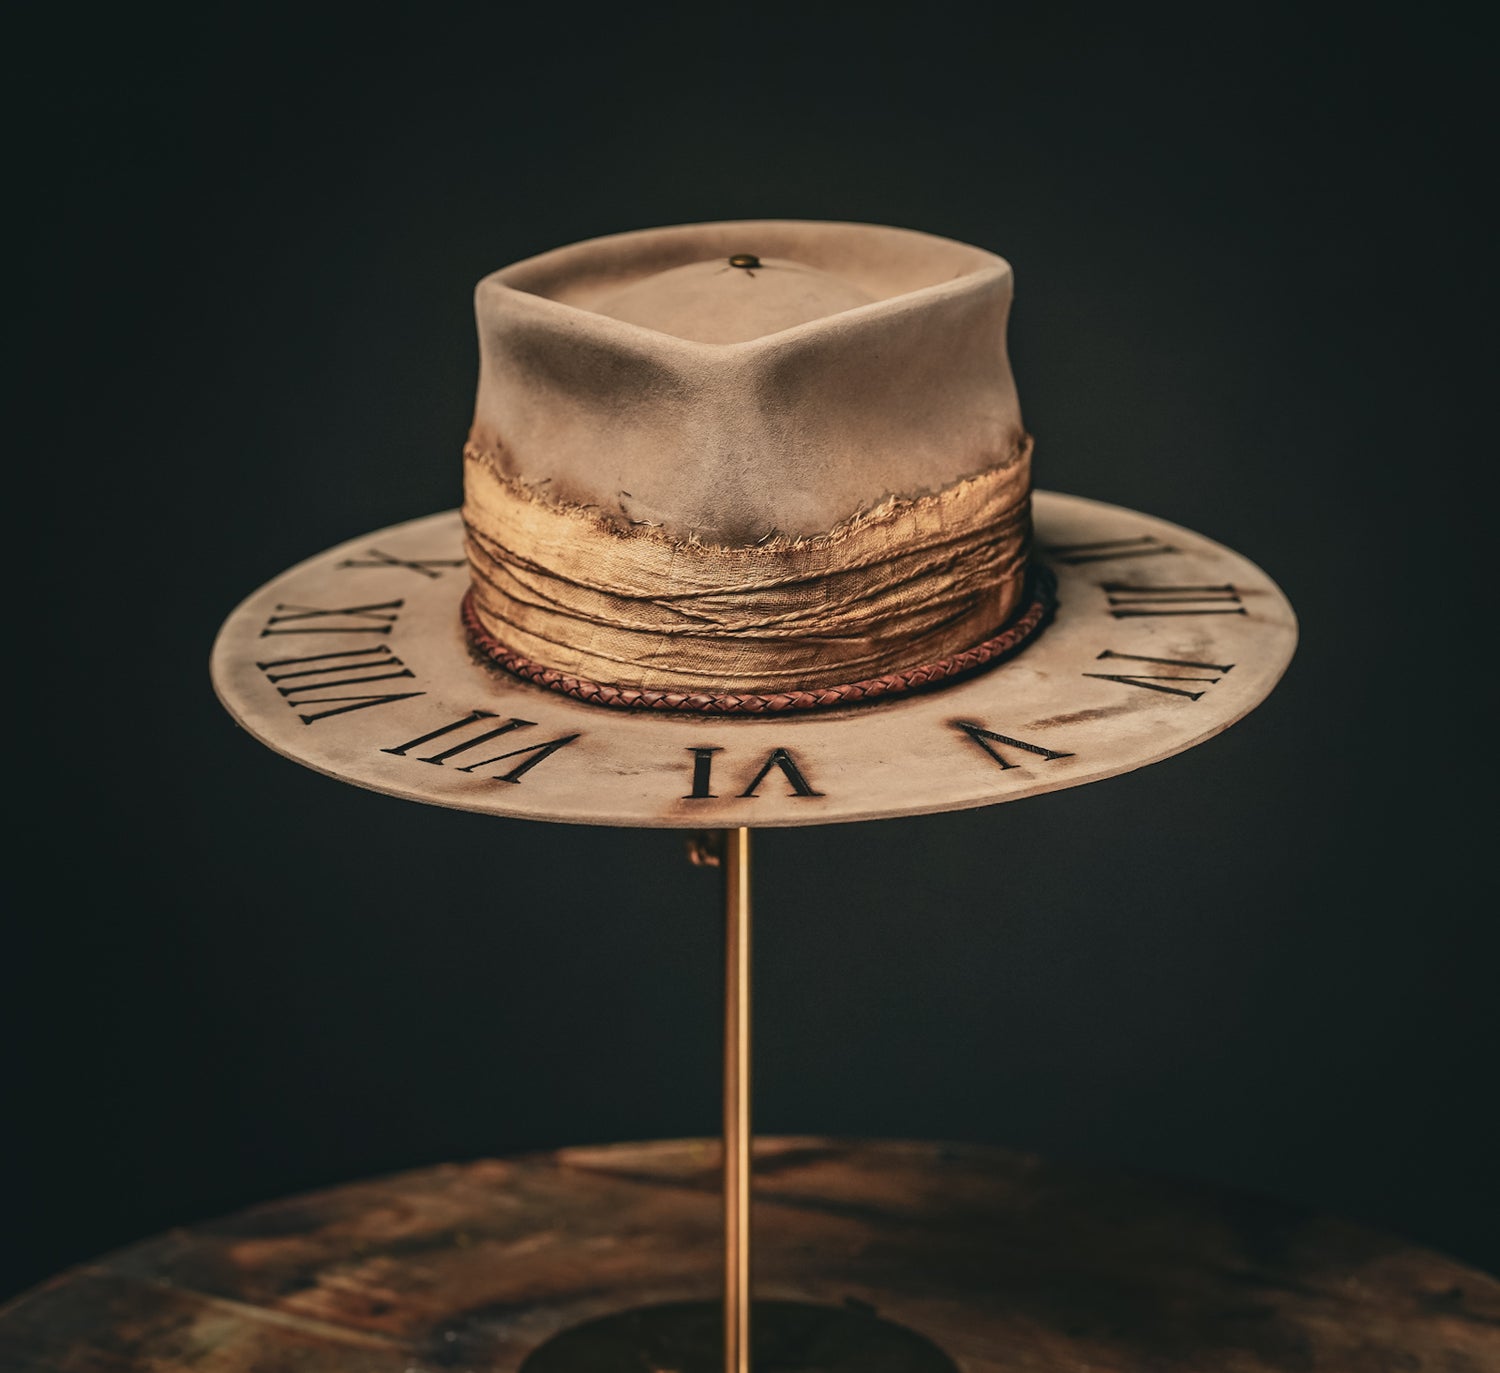 Custom made clock felt hat in brown color front